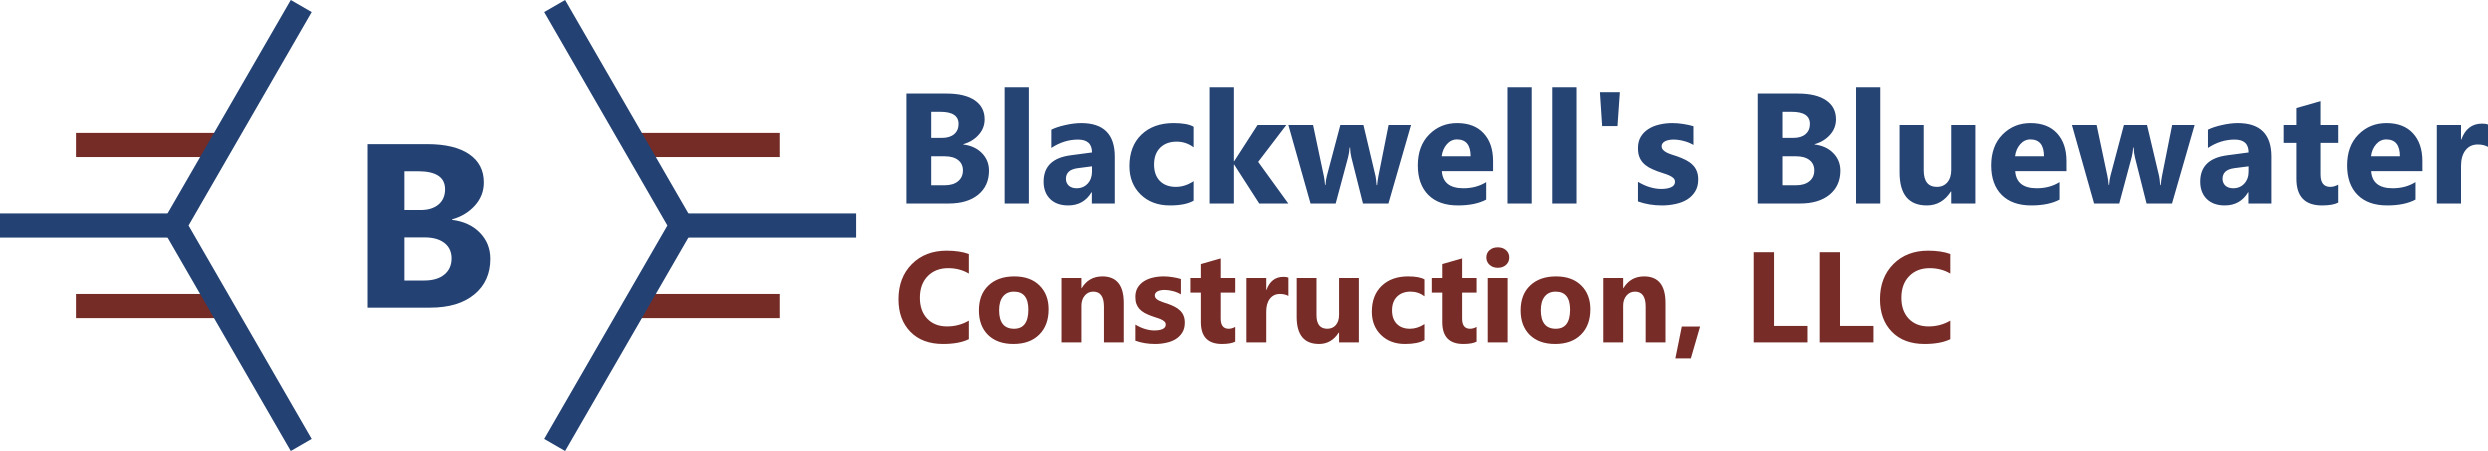 Blackwell's Bluewater  Construction, LLC